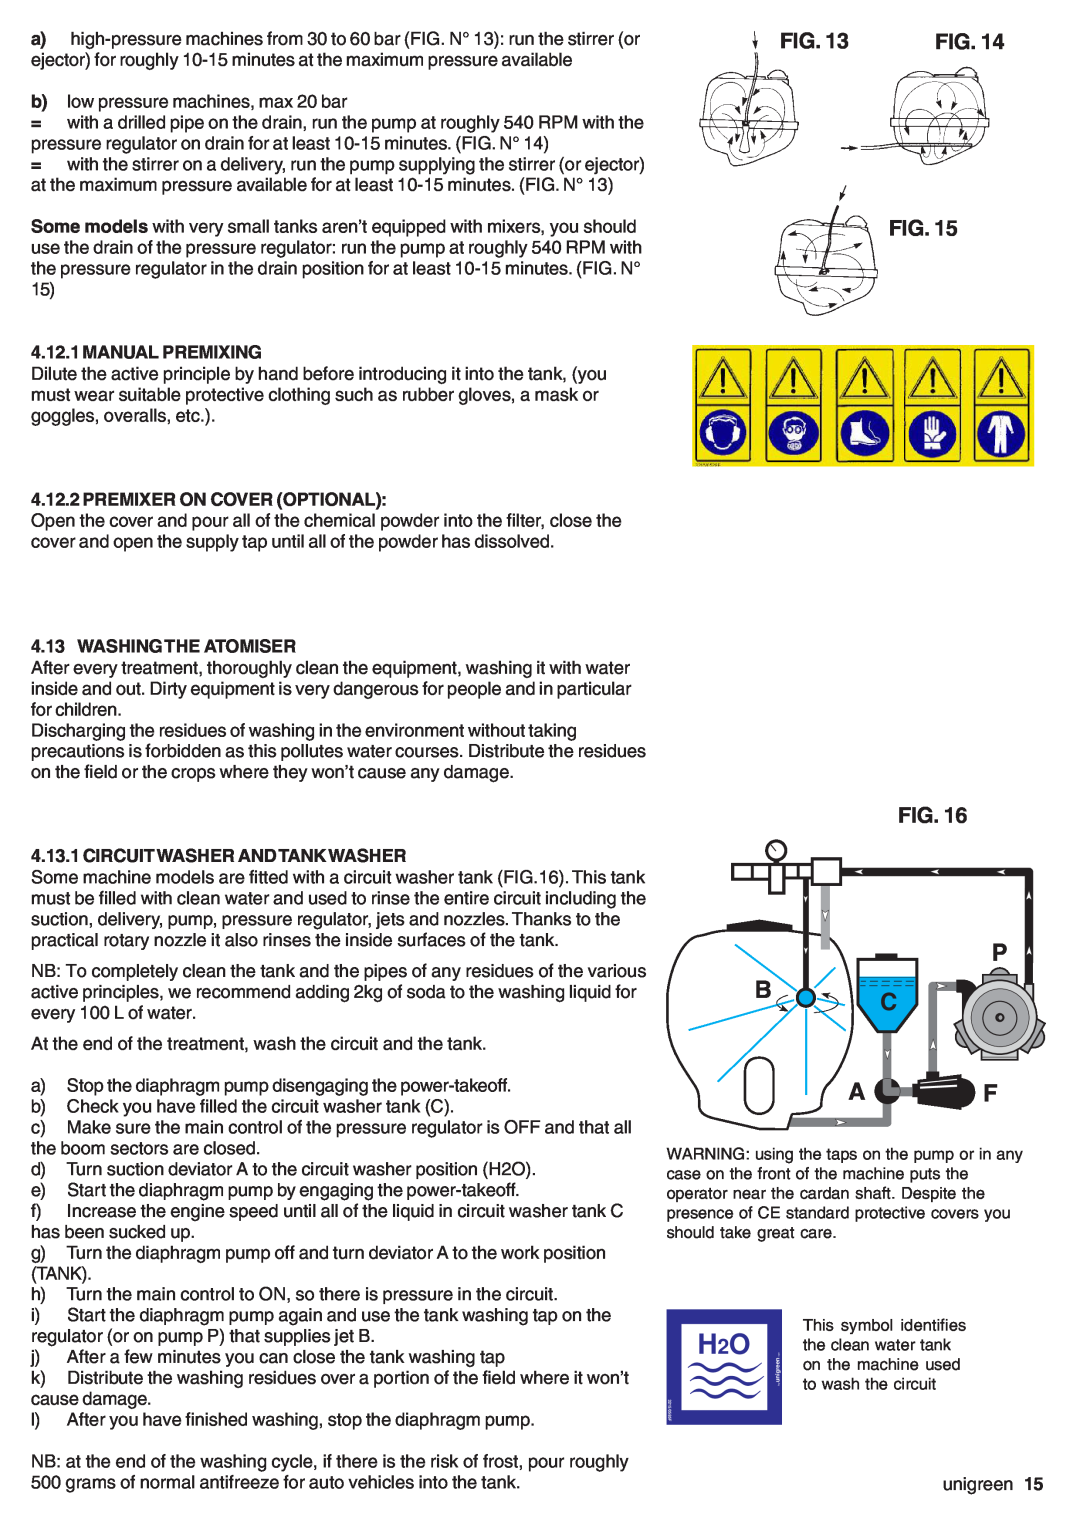 Unigreen SIRIO Fig. Fig, Manual Premixing, Premixer On Cover Optional, Washing The Atomiser, Circuit Washer Andtank Washer 